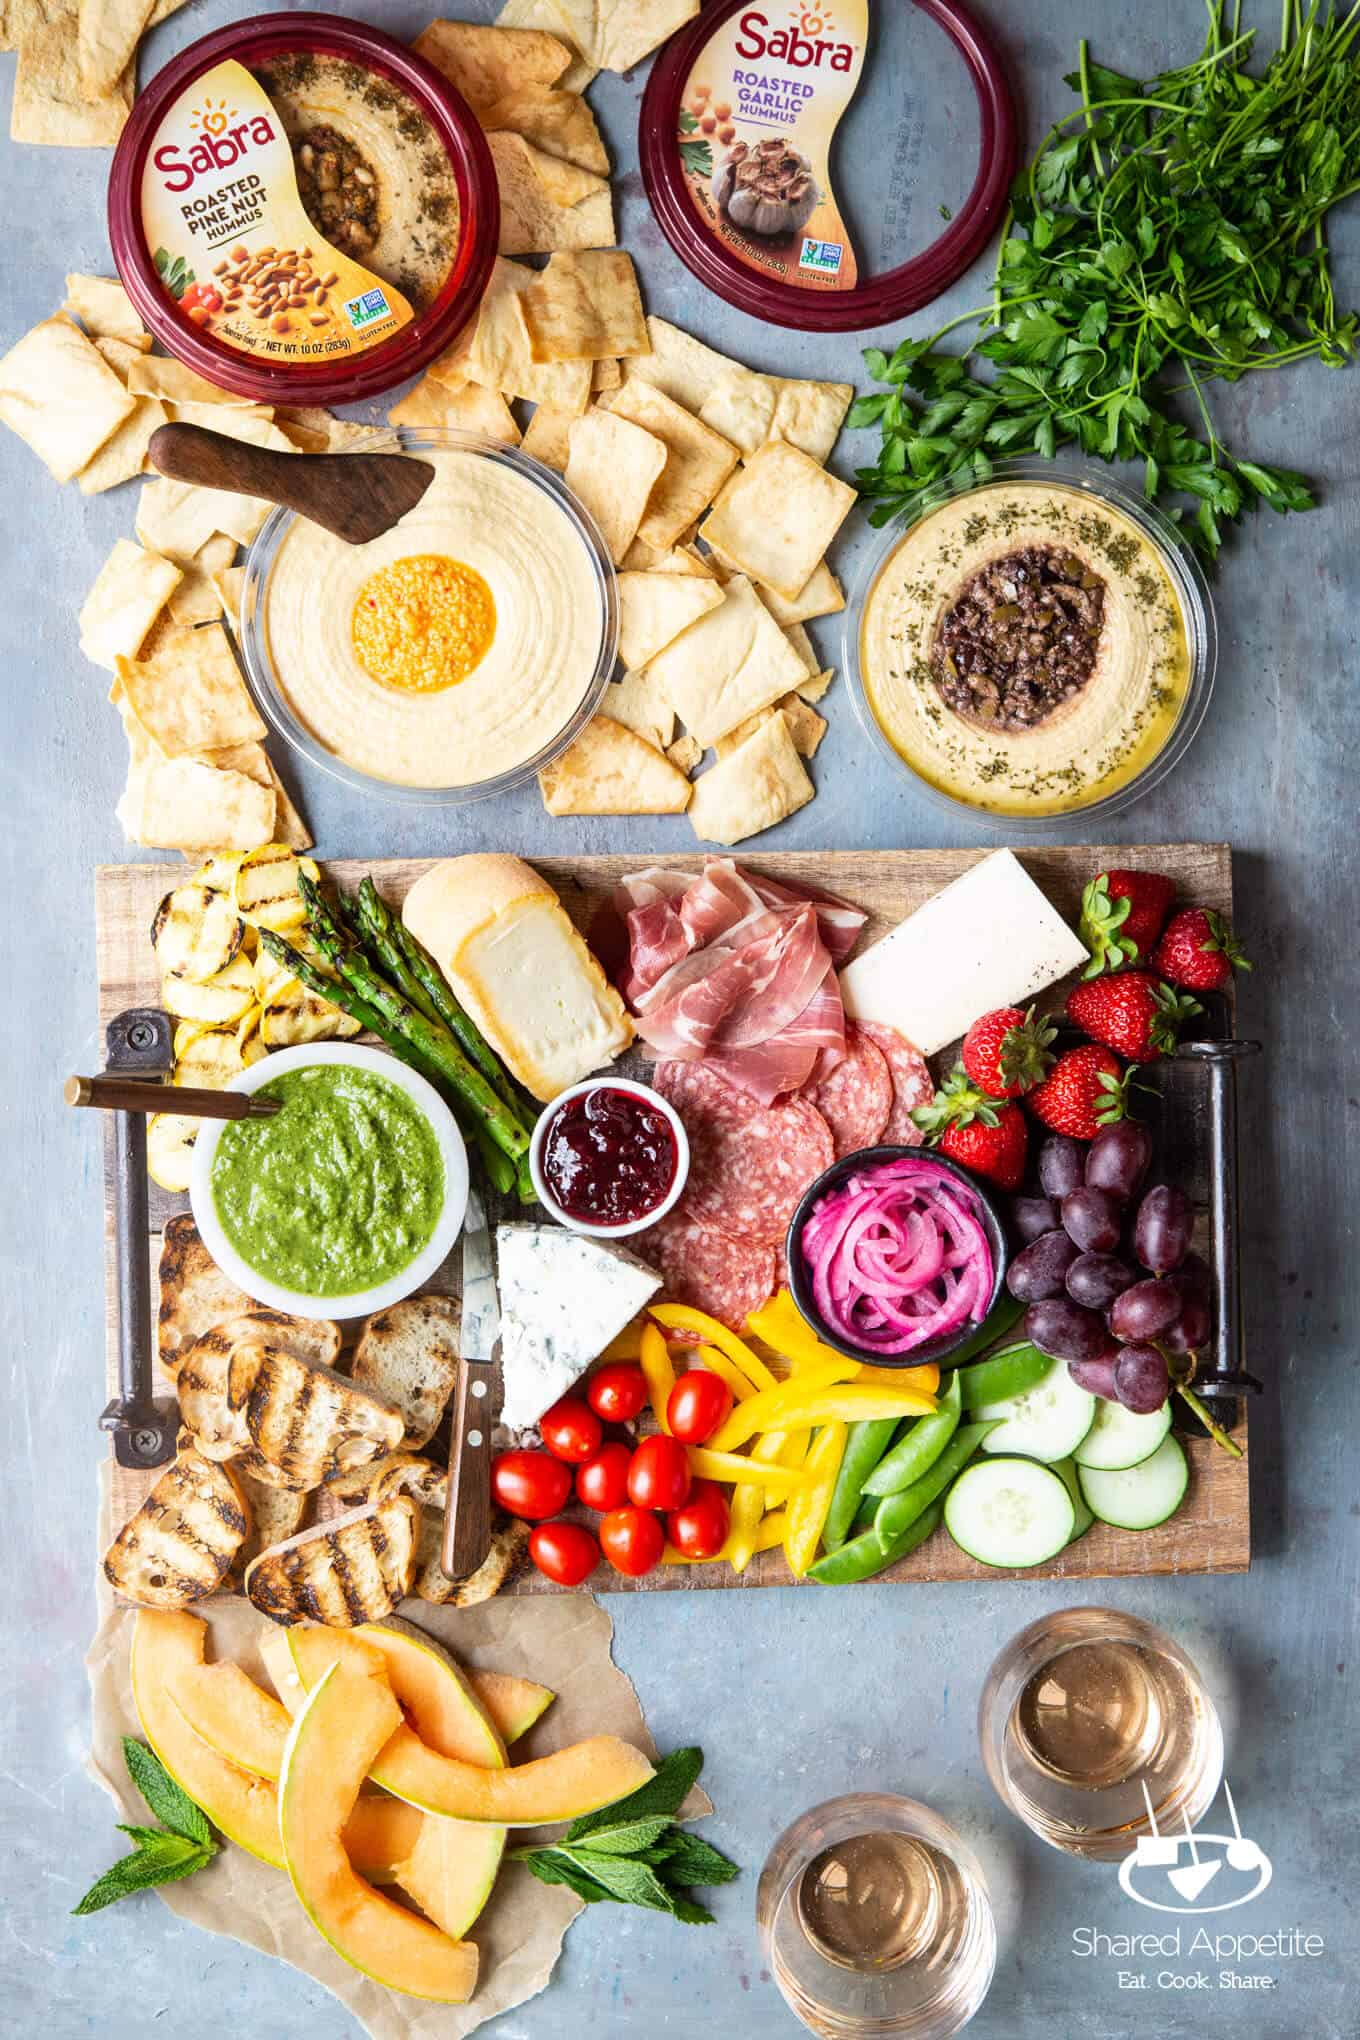 Sabra Hummus for How To Build A Summer Charcuterie Board | sharedappetite.com